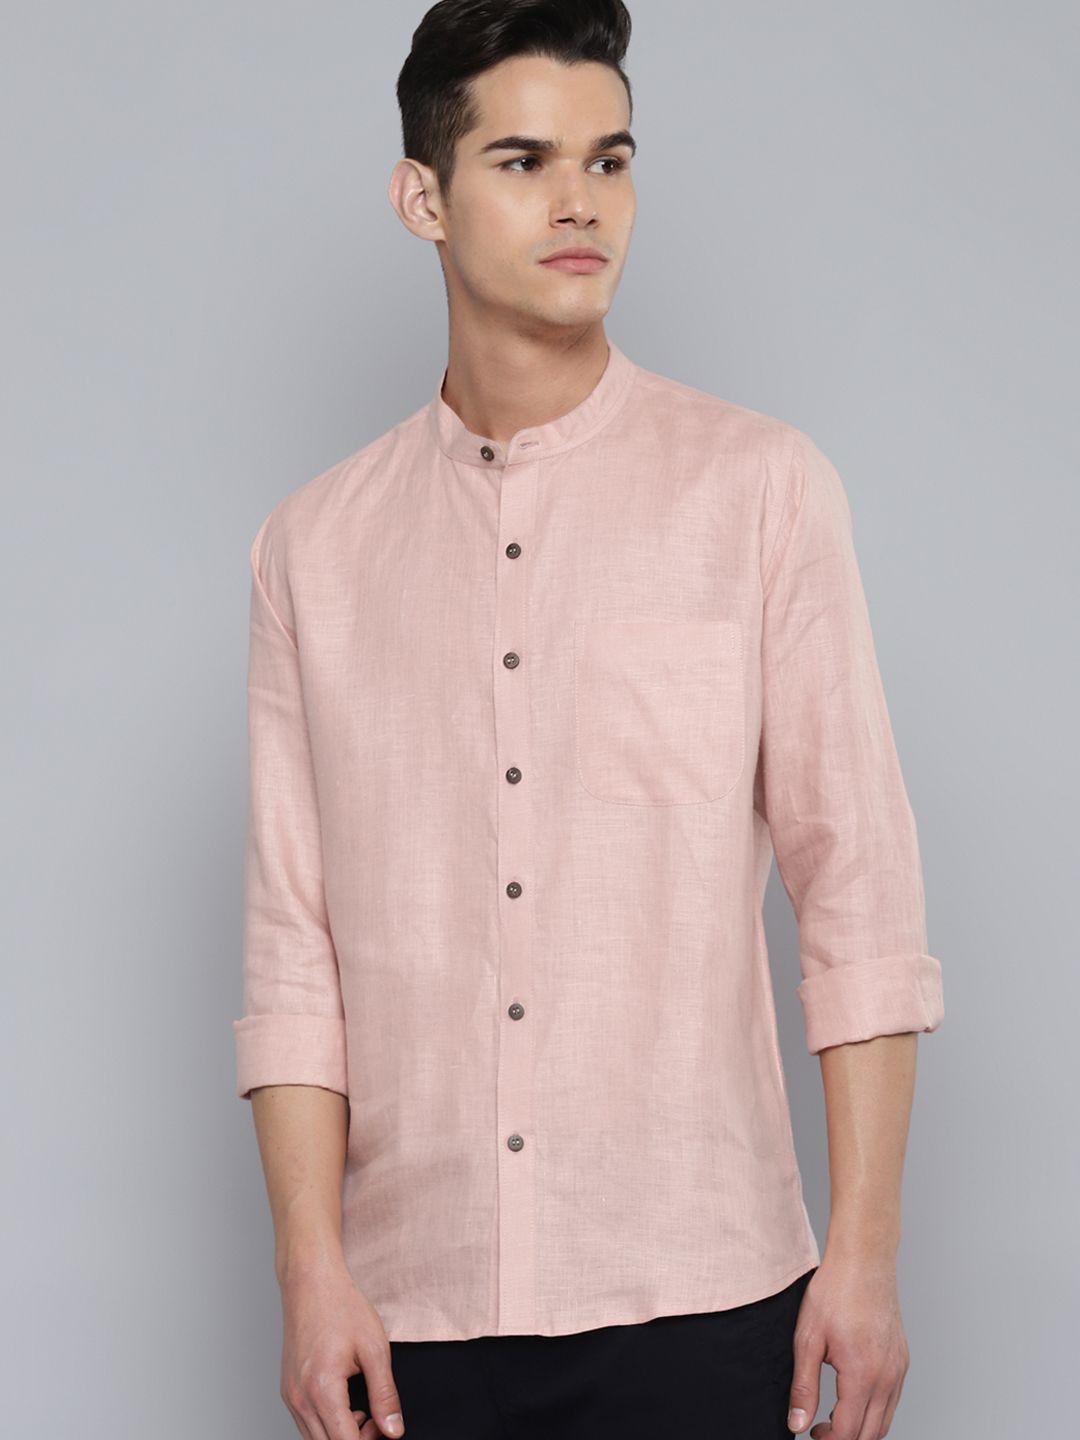 dennison men pink pure hemp sustainable slim fit casual shirt